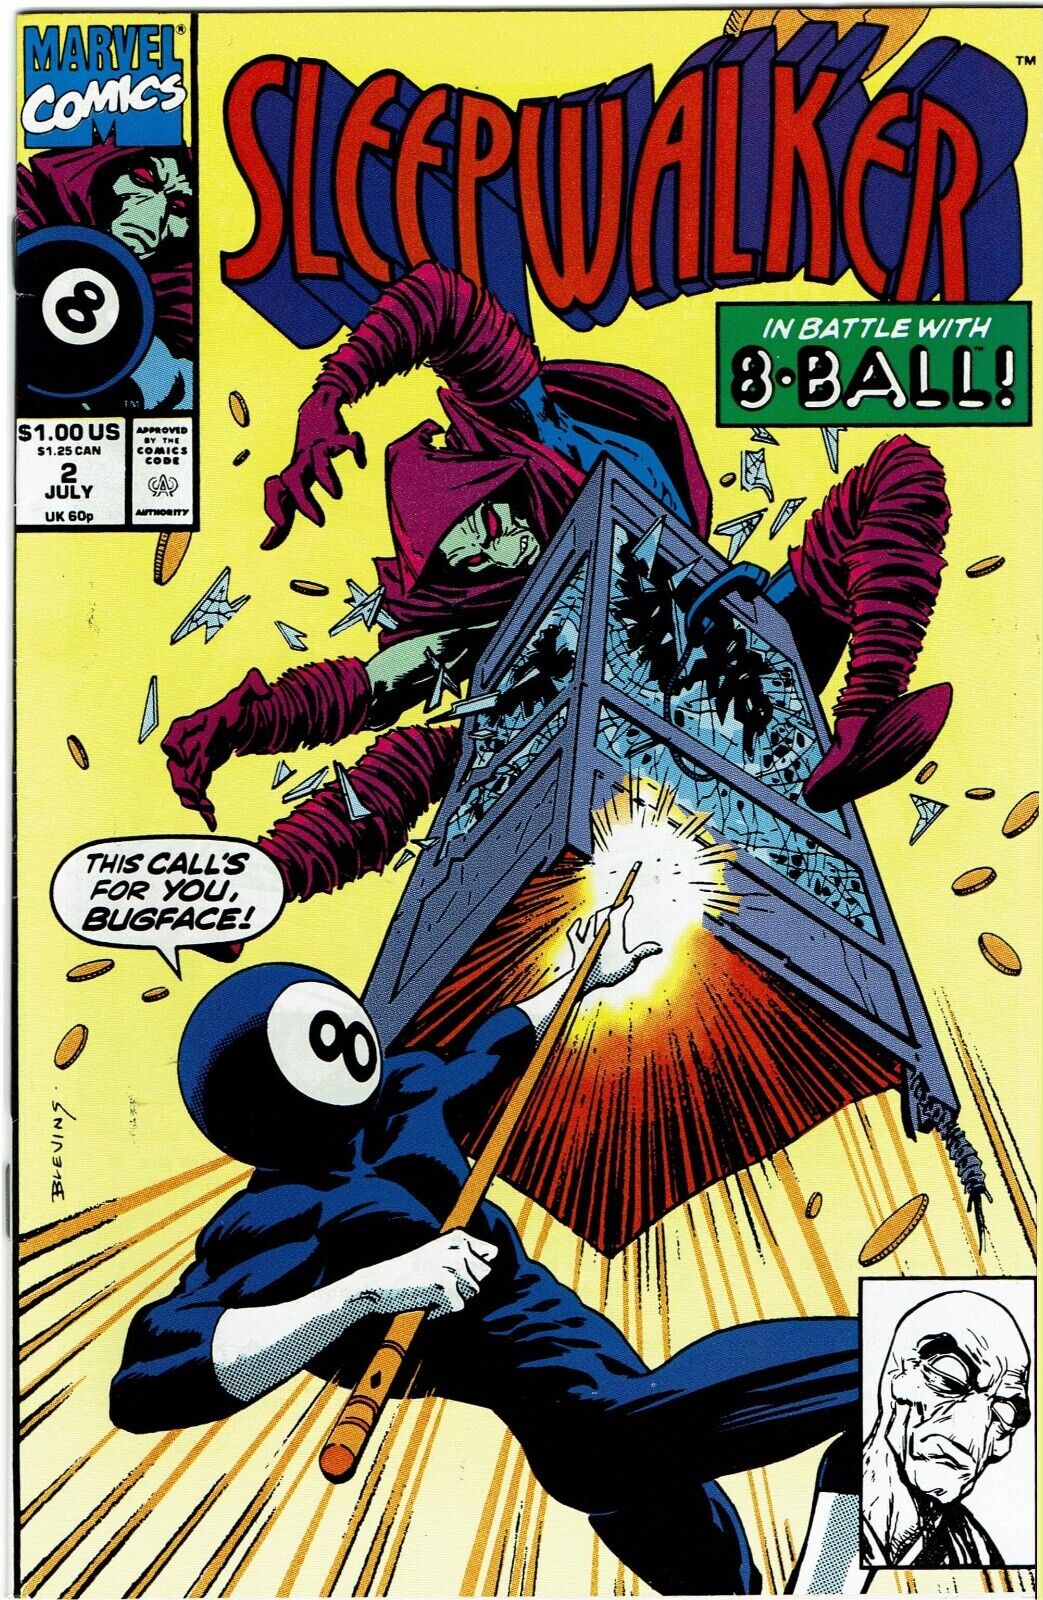 Sleepwalker in Battle with 8-Ball; Vol. 1 No. 2 July 1991, Marvel Comics